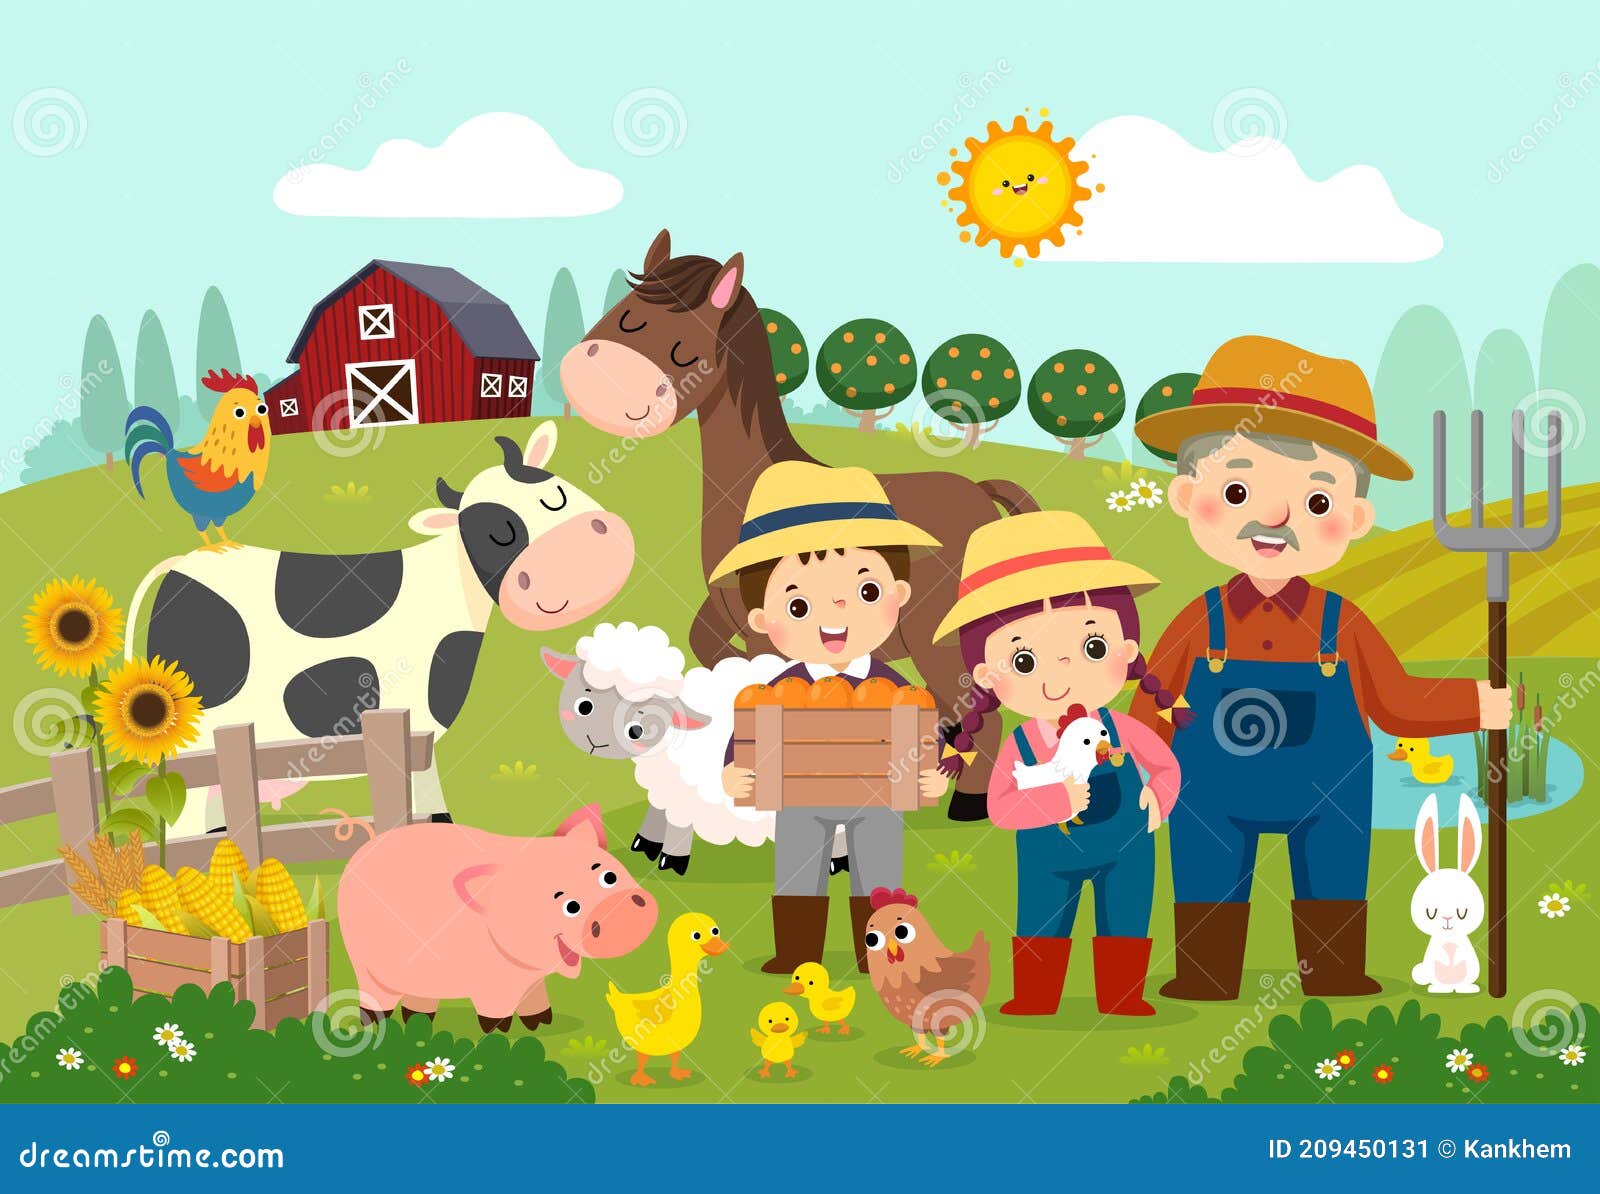 cartoon of happy farmer and kids with farm animals on the farm